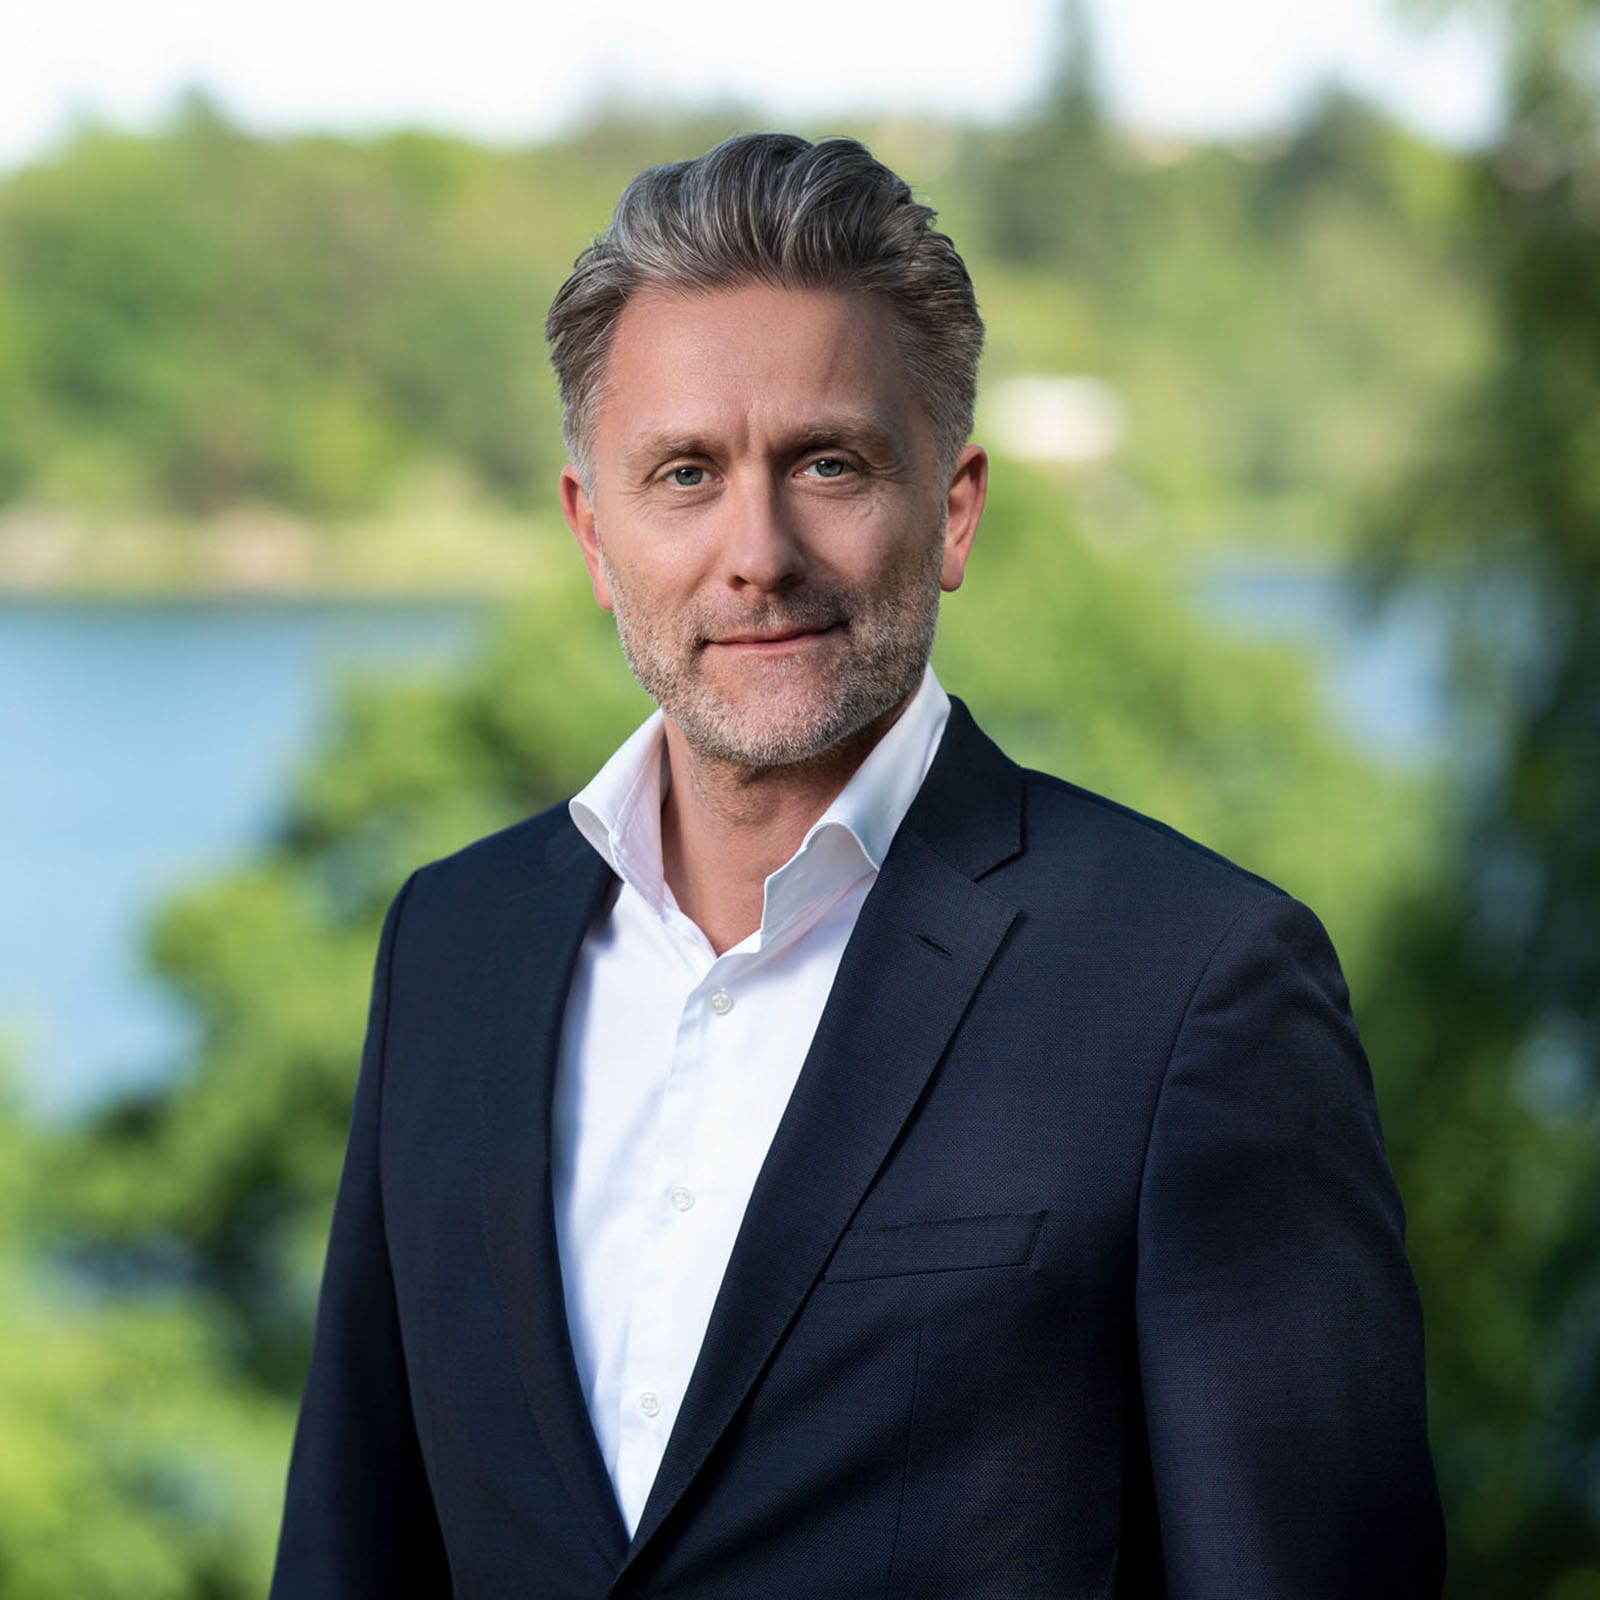 LogPoint Founder & Managing Director US Soren Laustrup